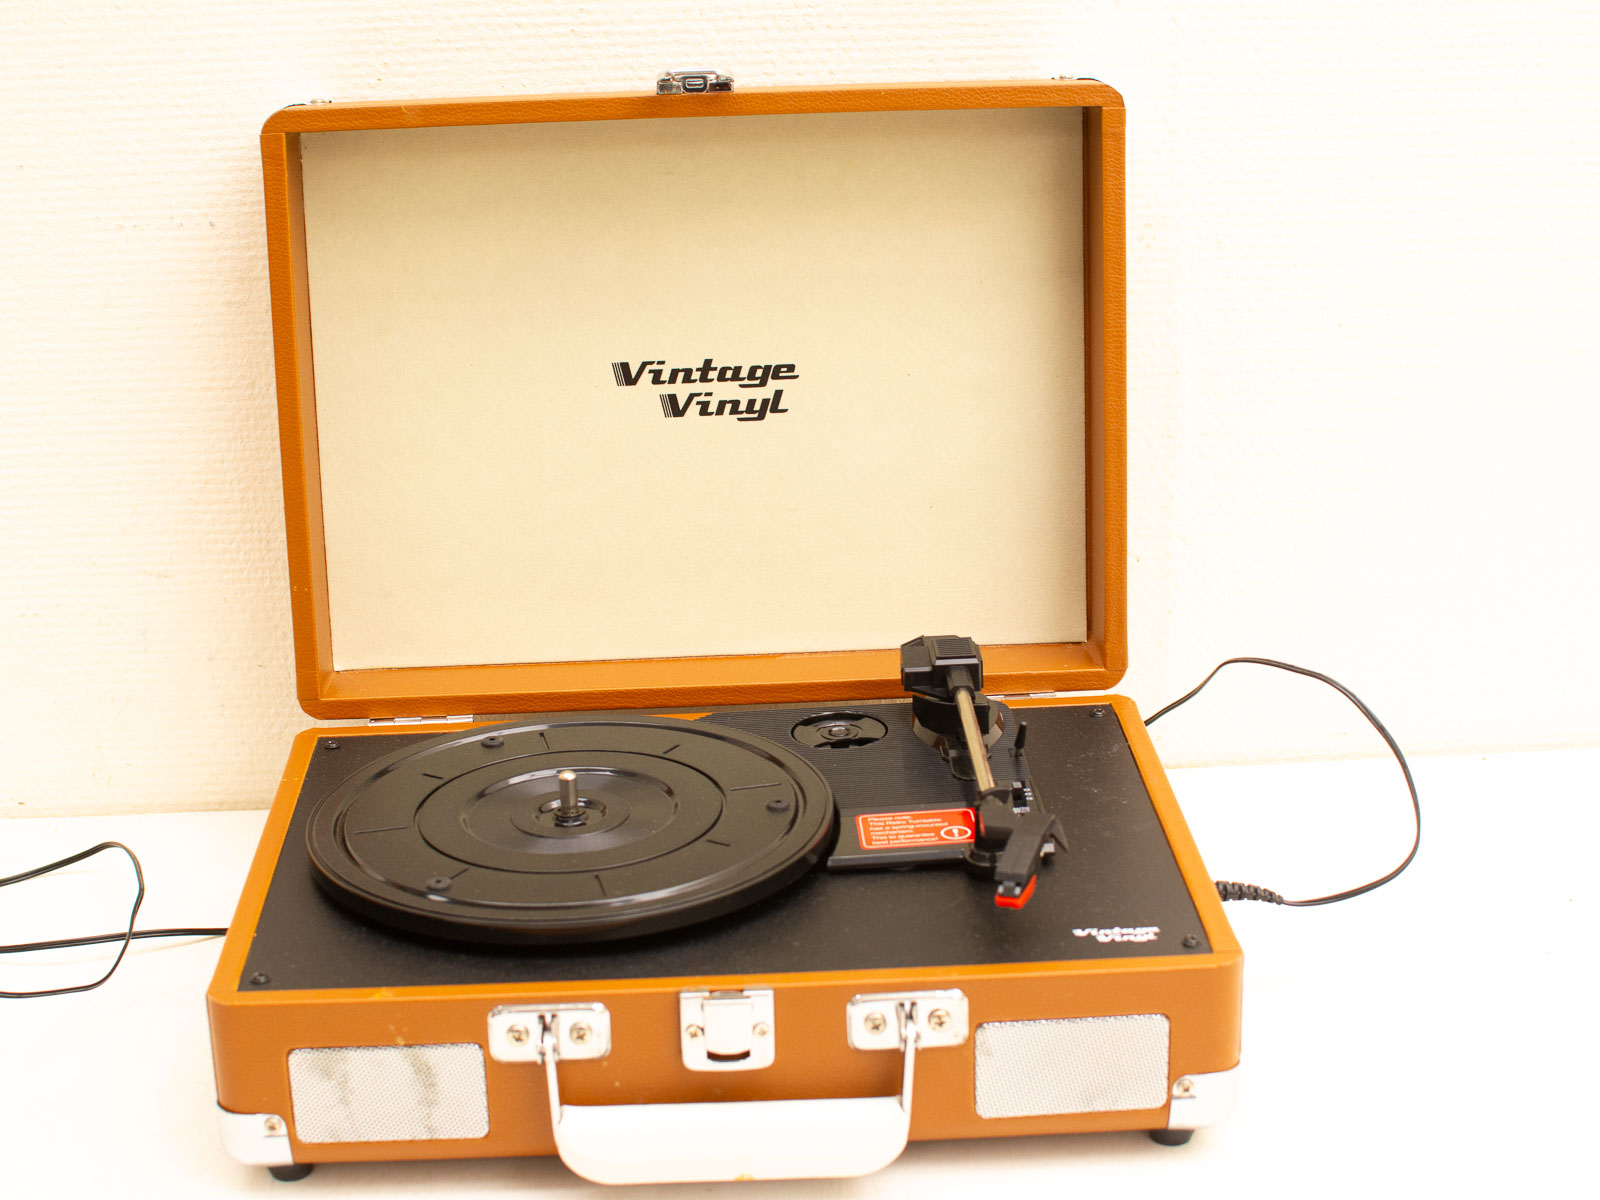 Vintage Vinyl platenspeler 32416